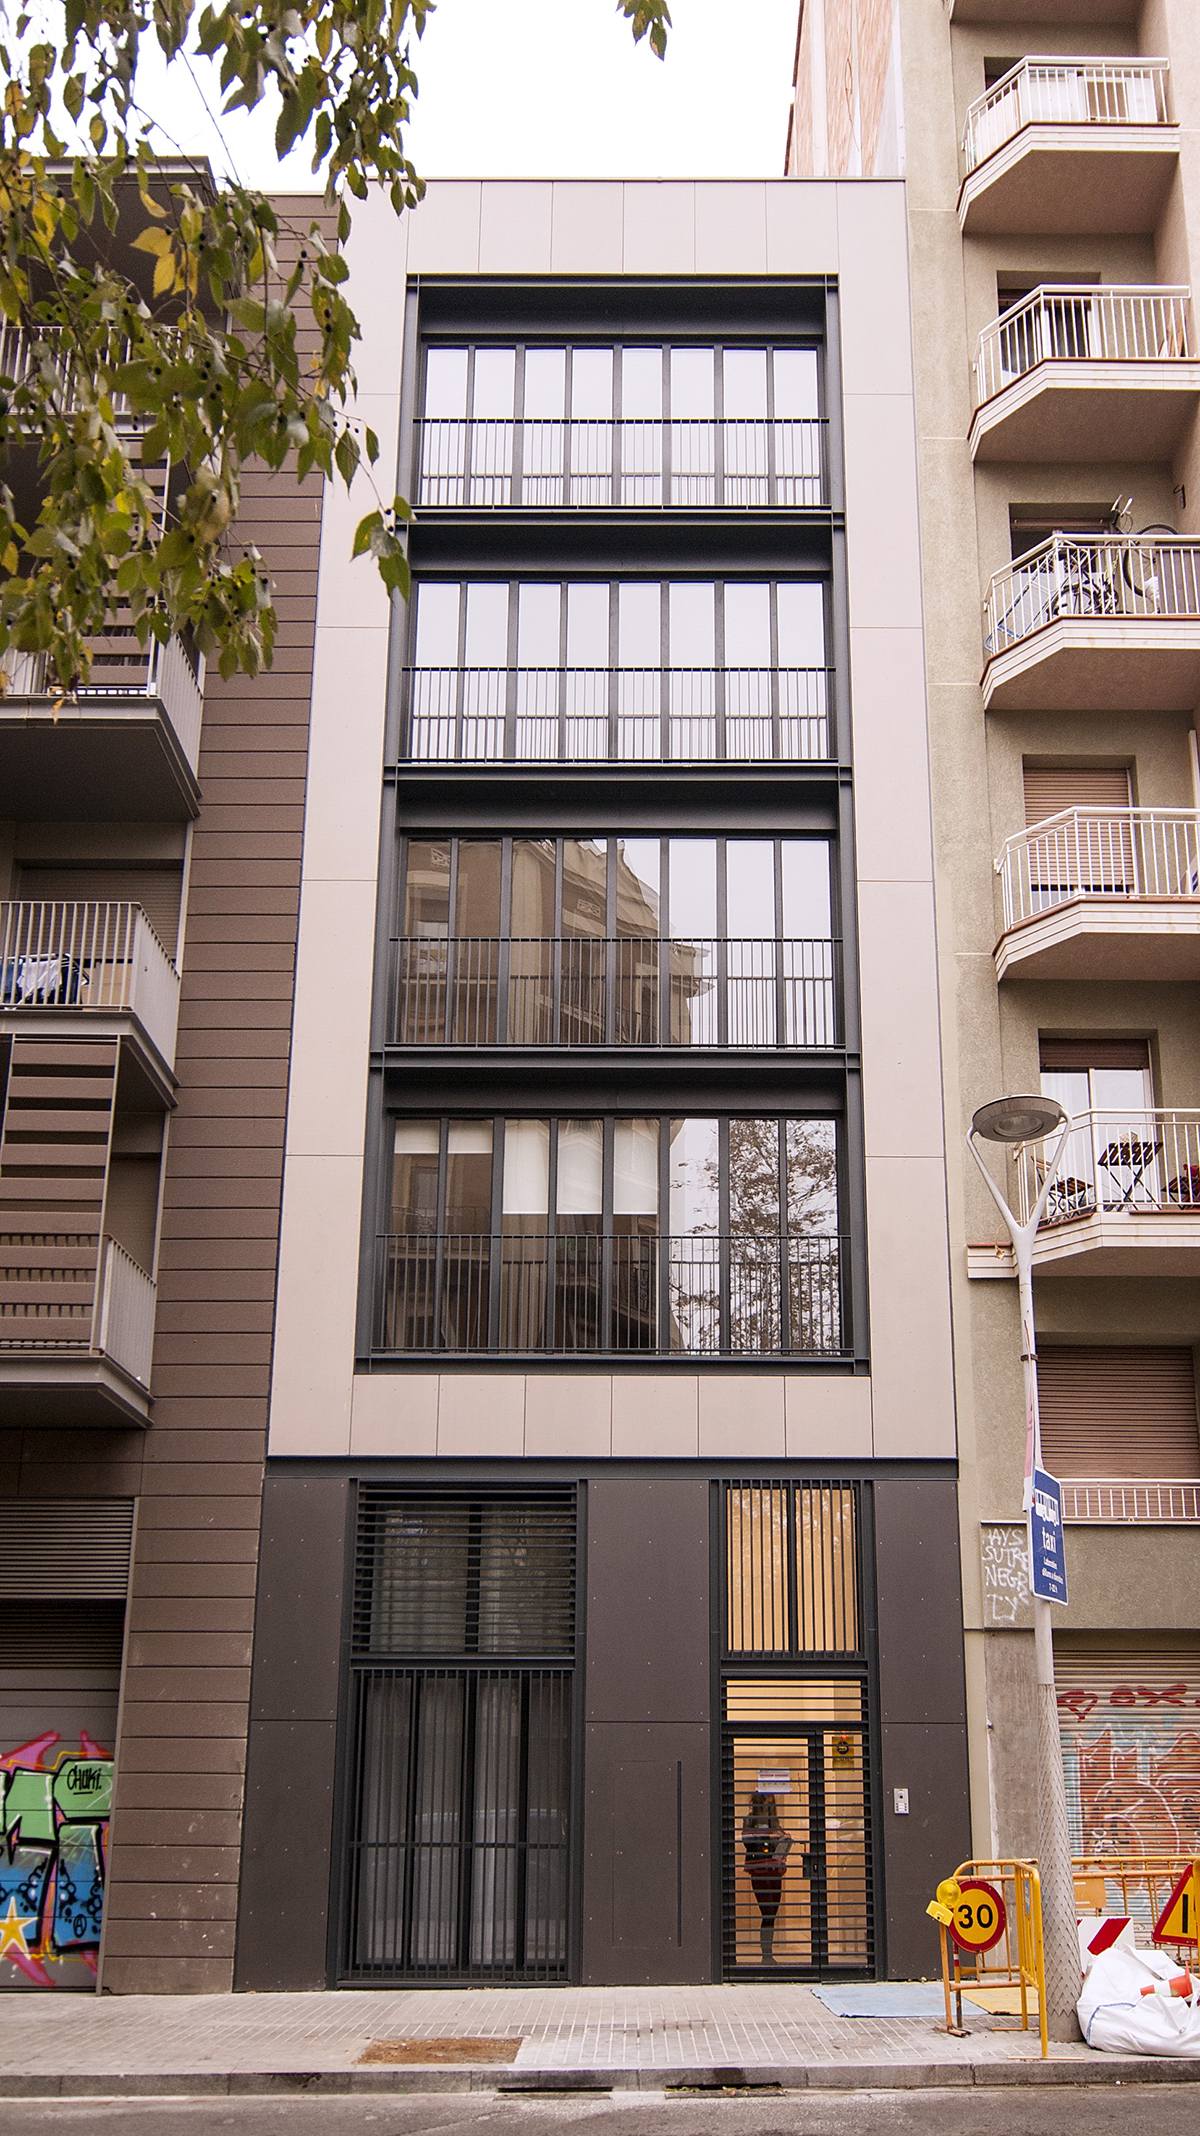 Housing Block Apartment Eixample - Barcelona